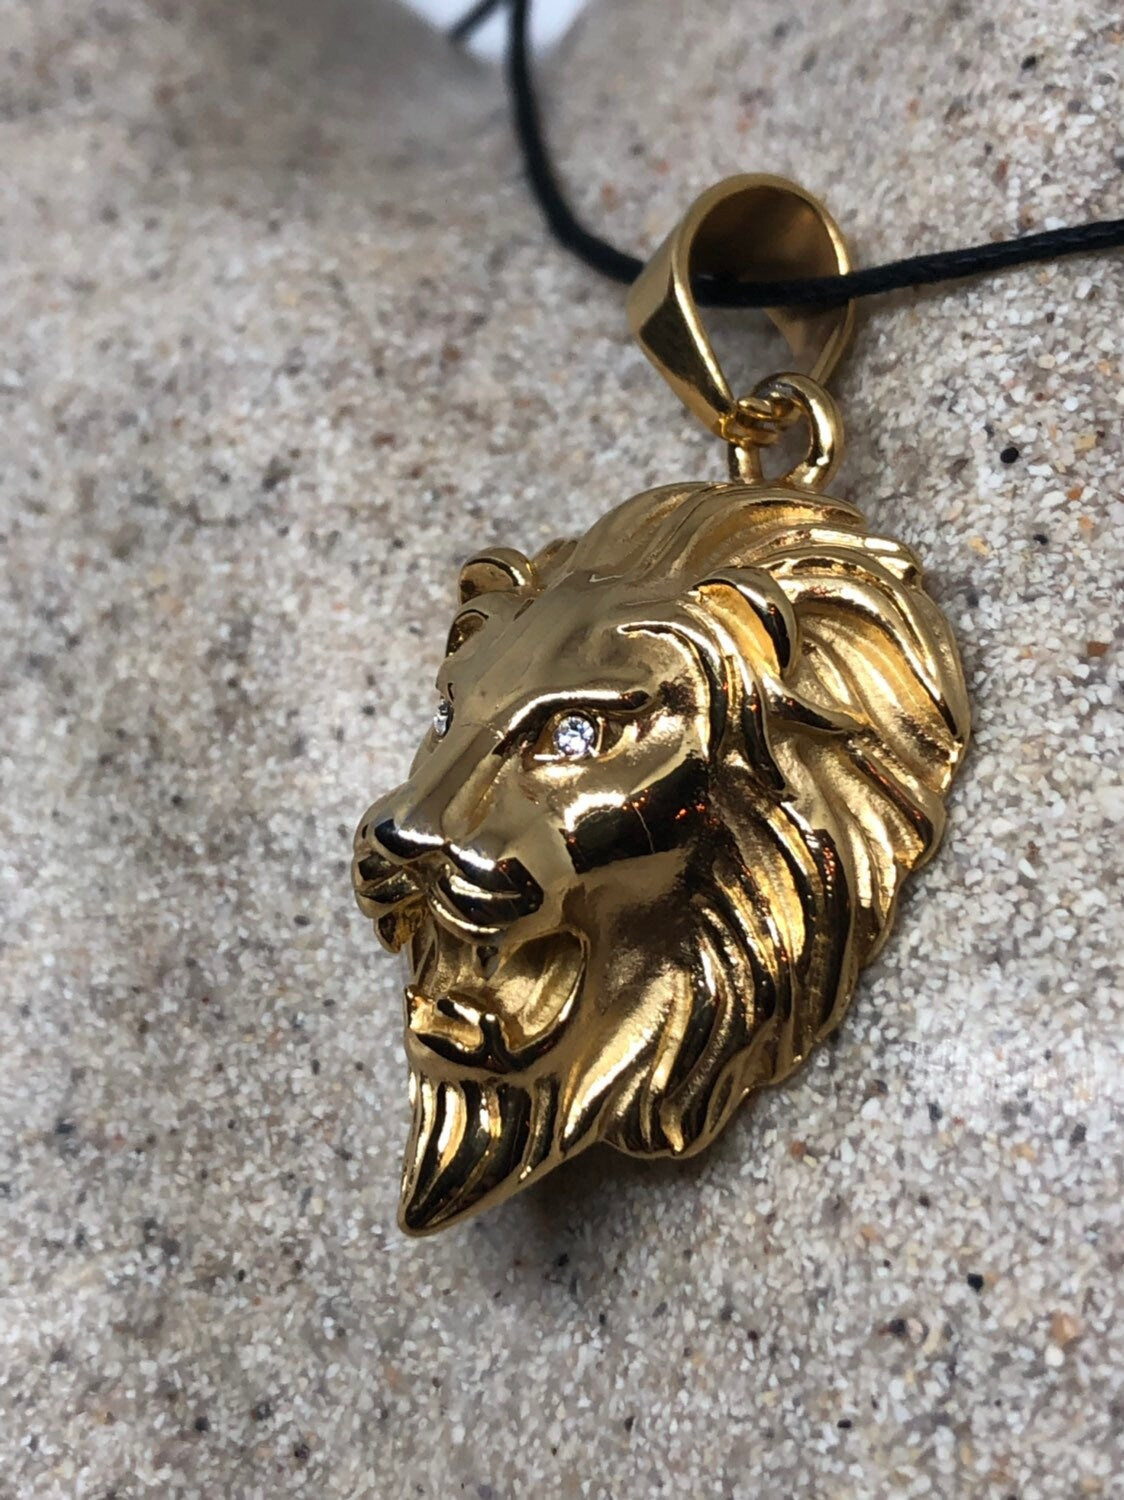 Vintage Golden Stainless Steel Lion Pendant Necklace